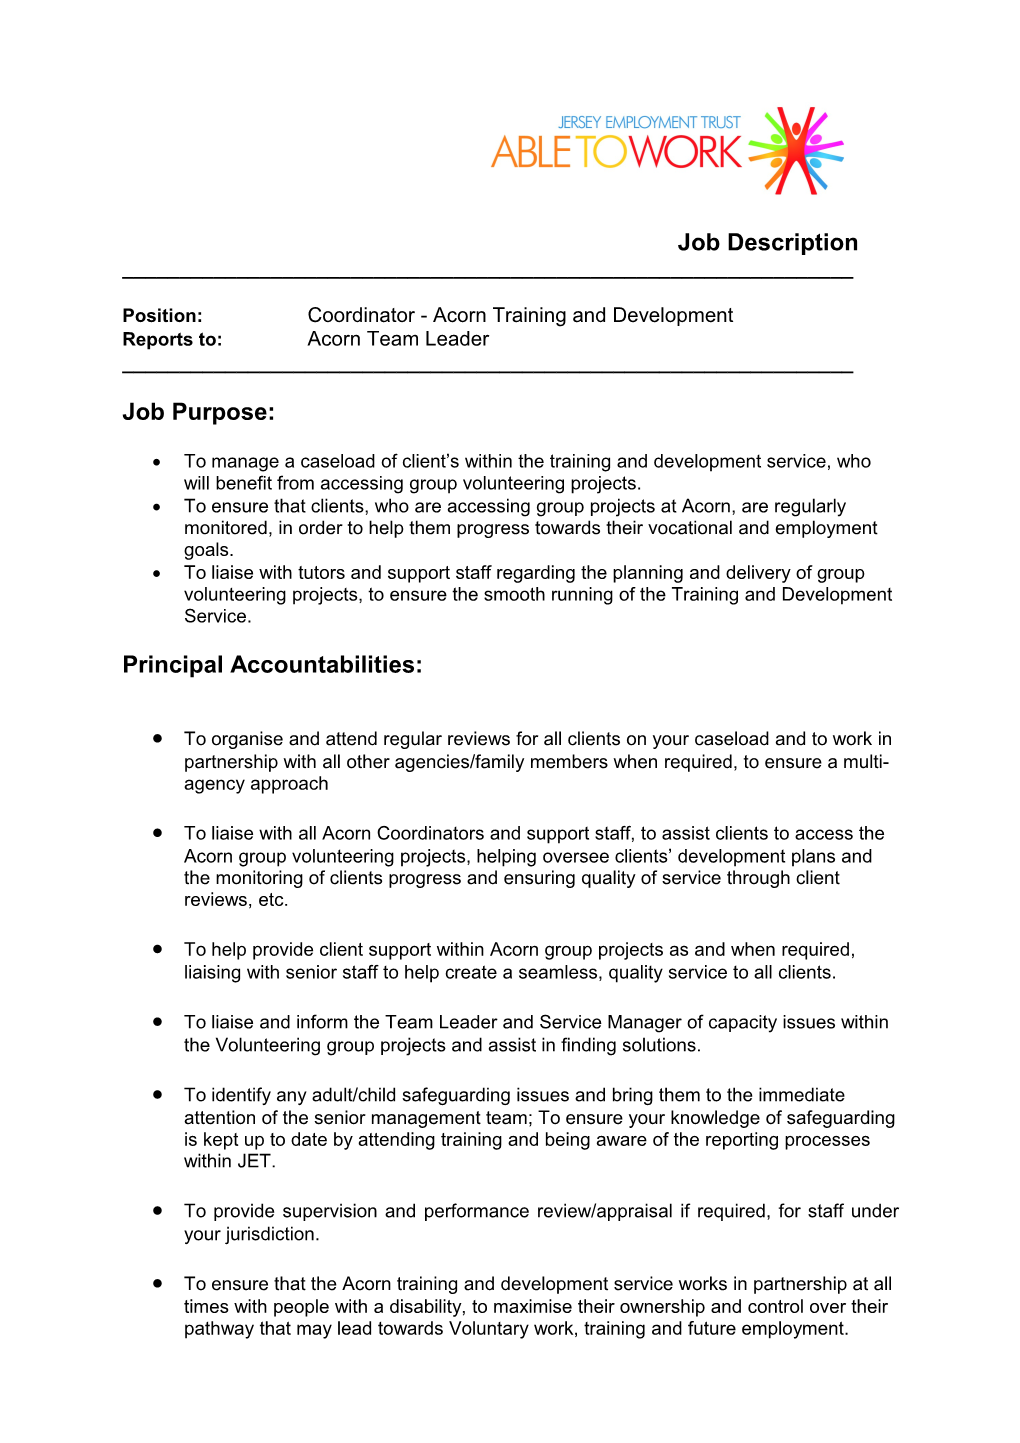 Position: Coordinator - Acorn Training and Development